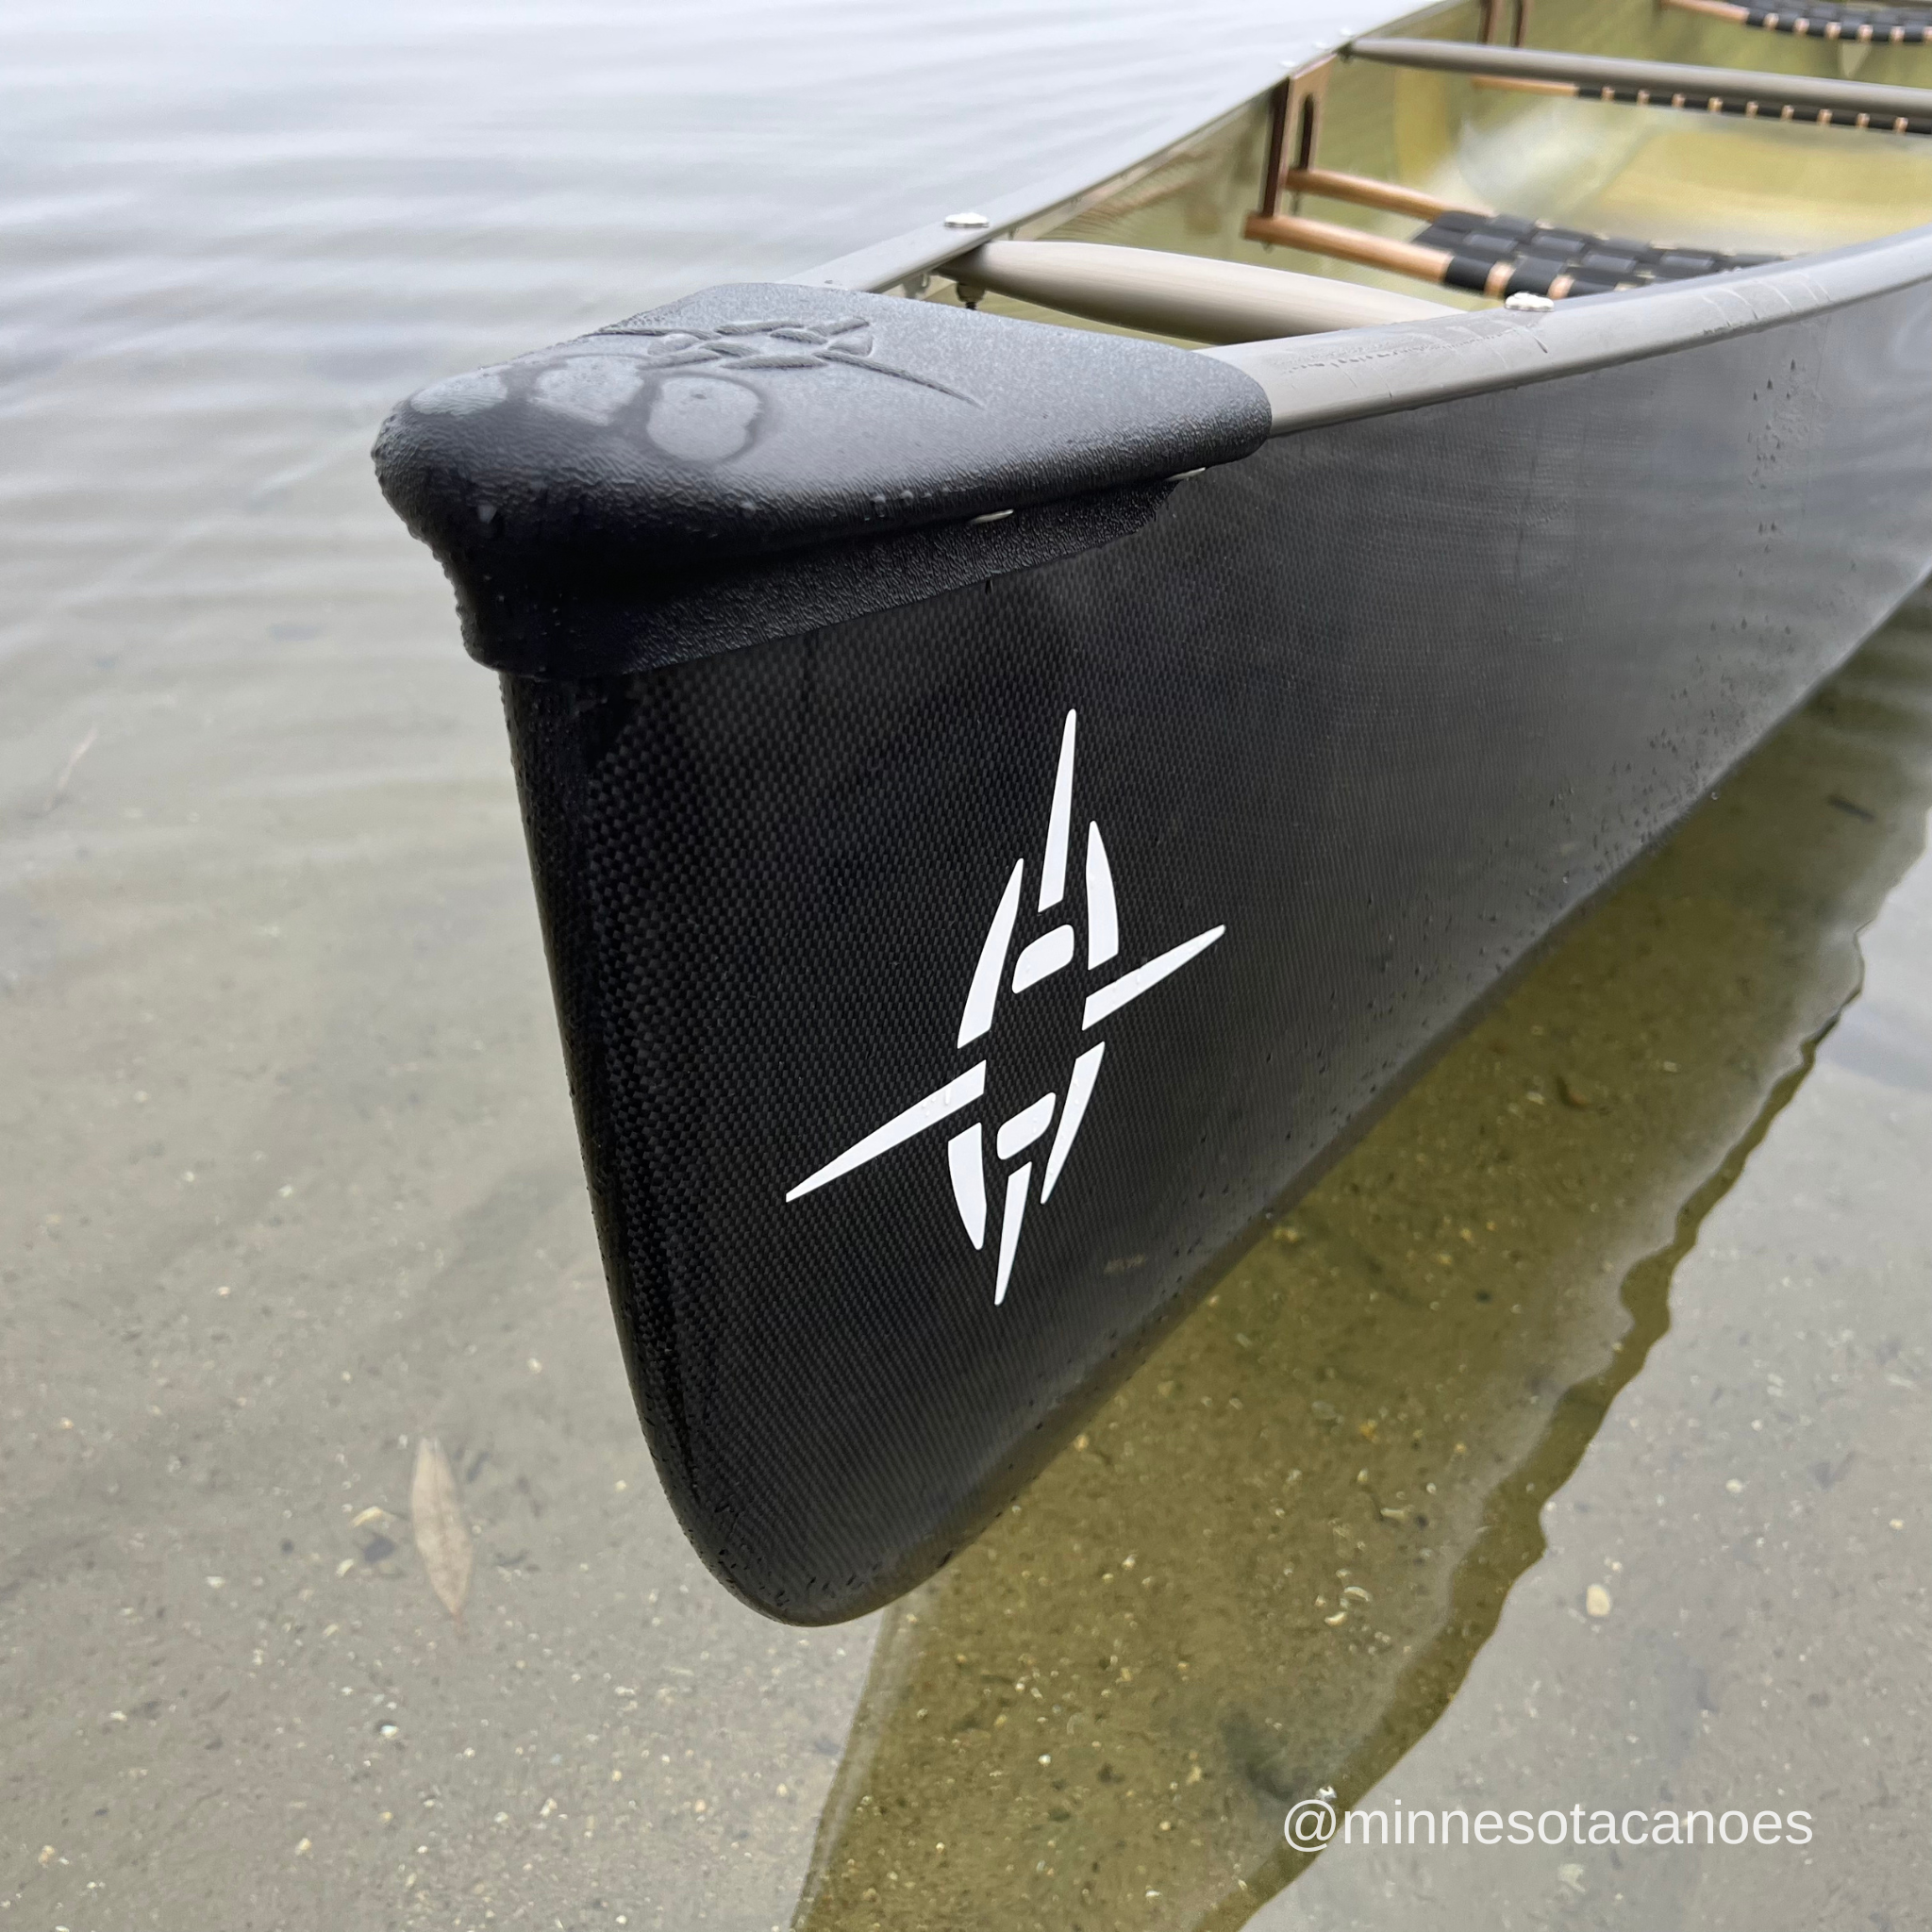 POLARIS (16' 9") BlackLite Tandem Northstar Canoe with 3 Seats